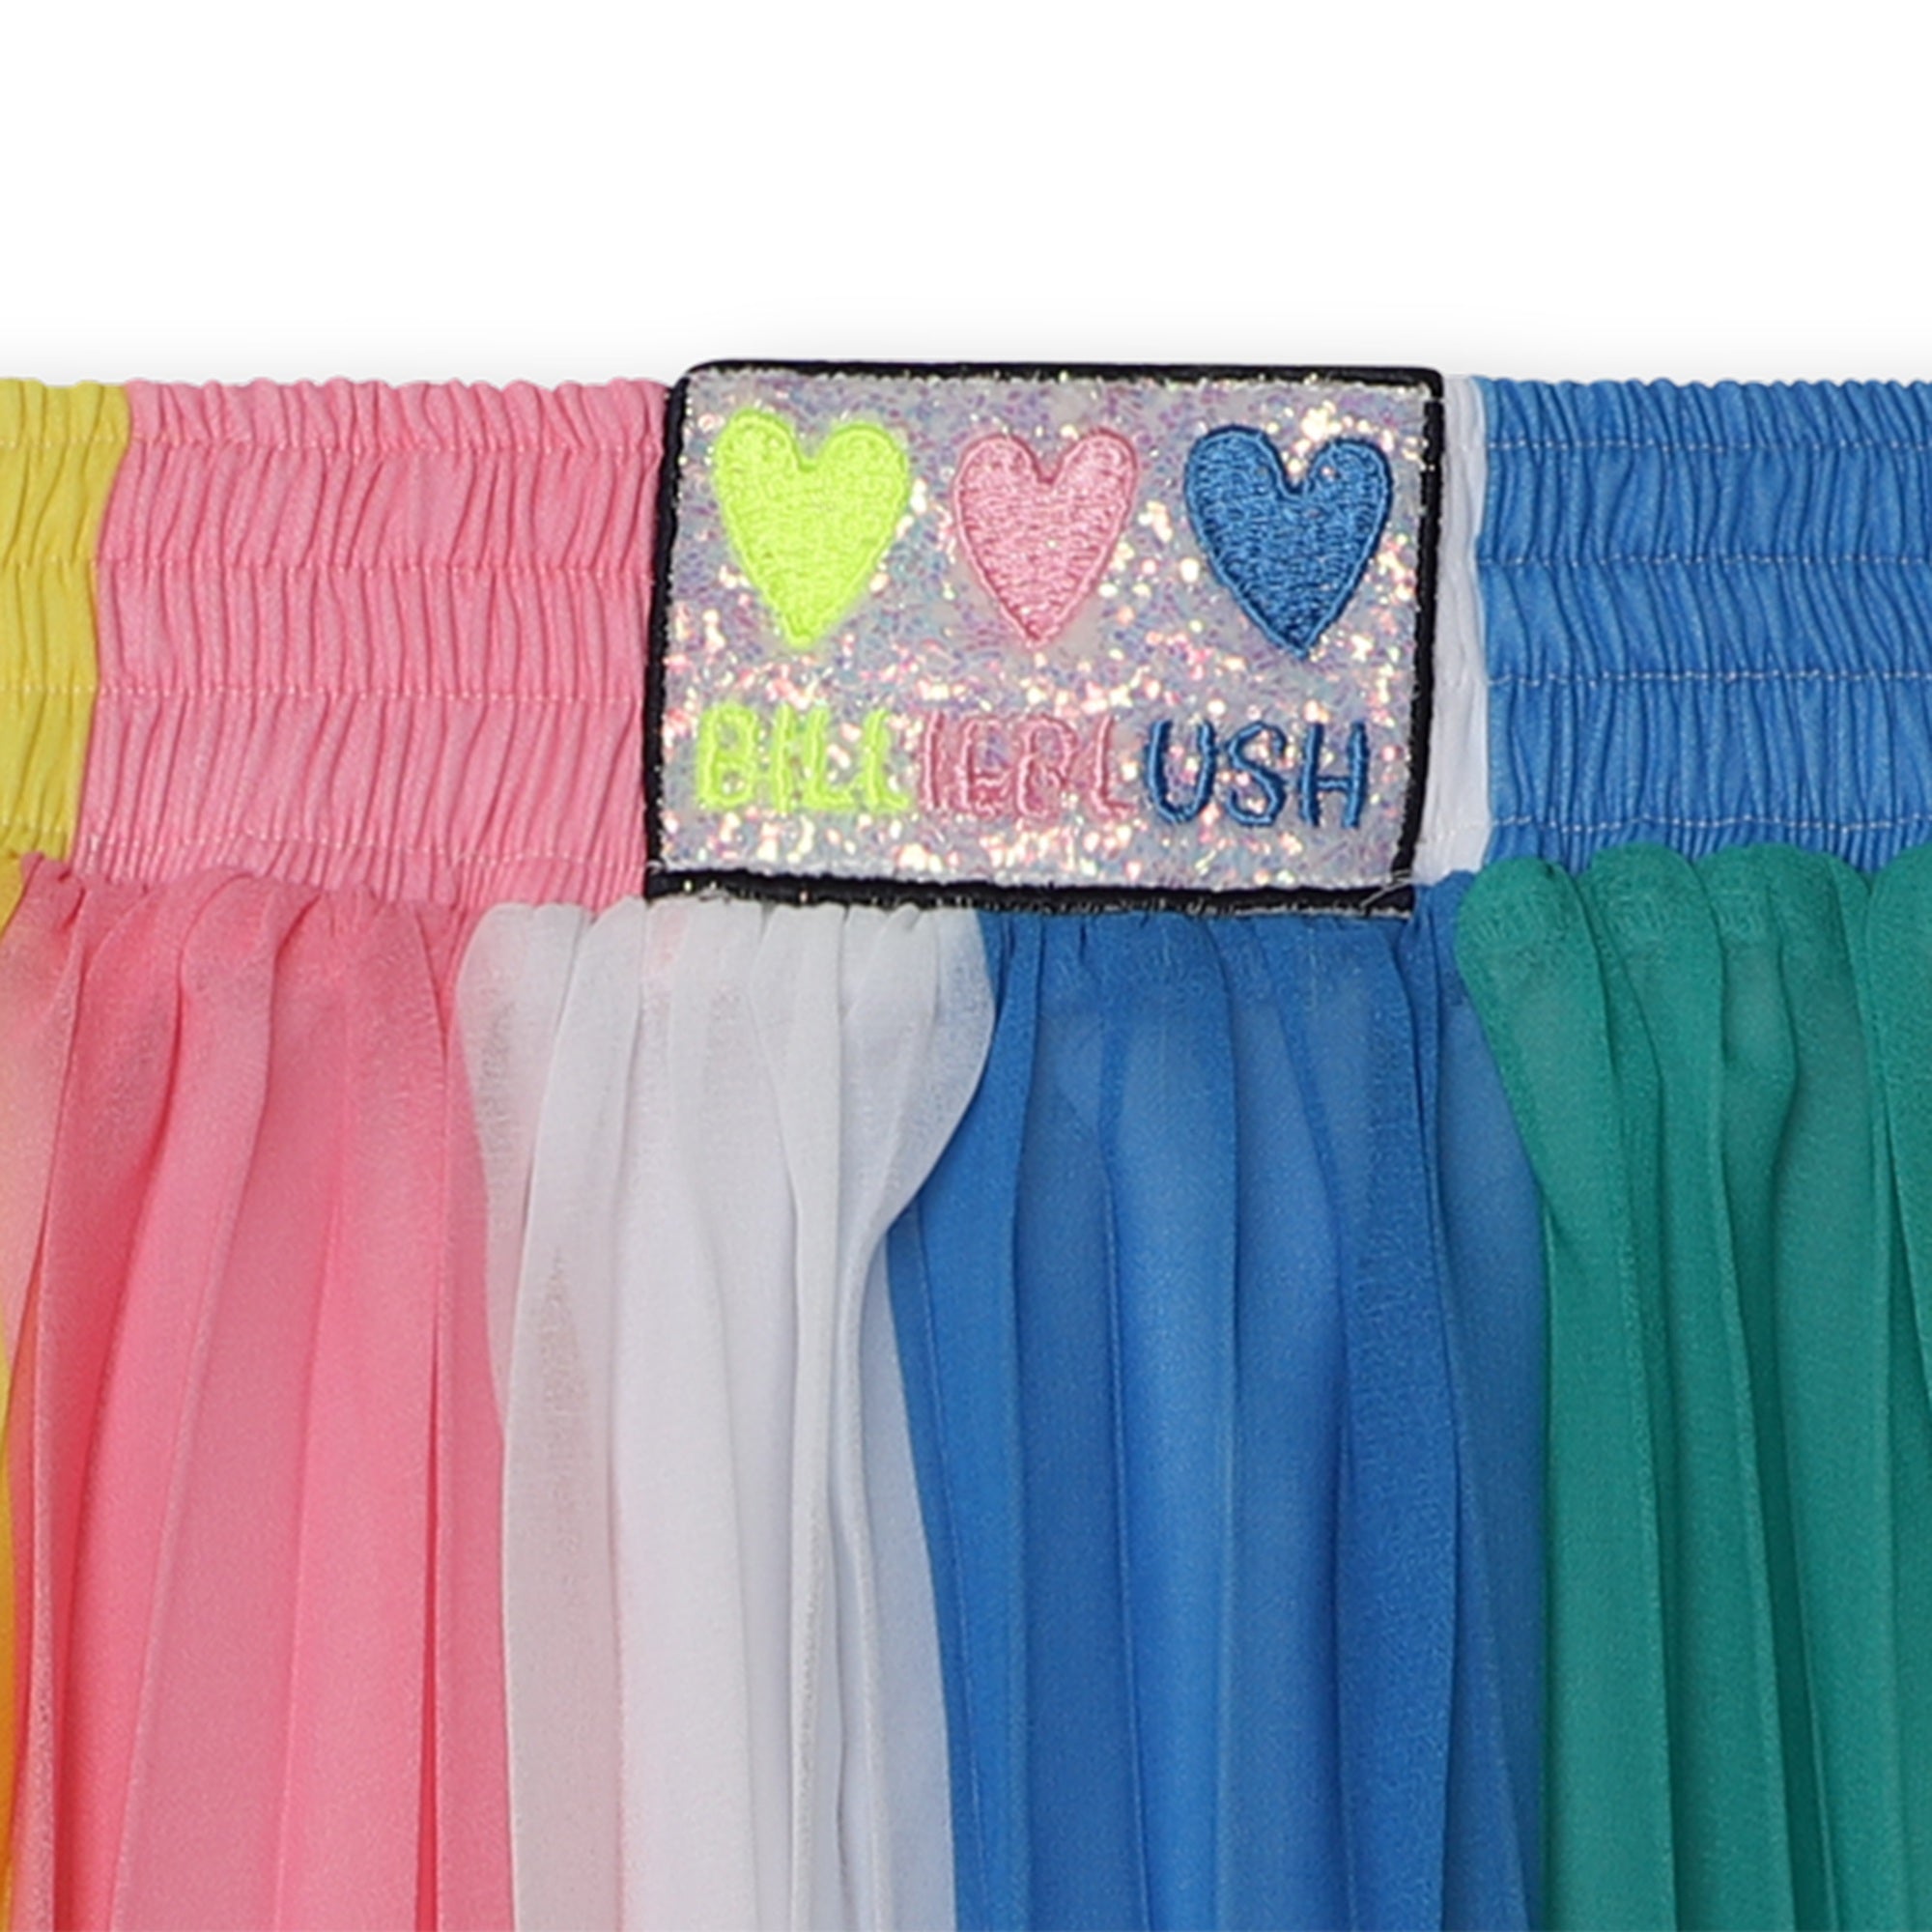 Girls Multicolor Pleated Skirt